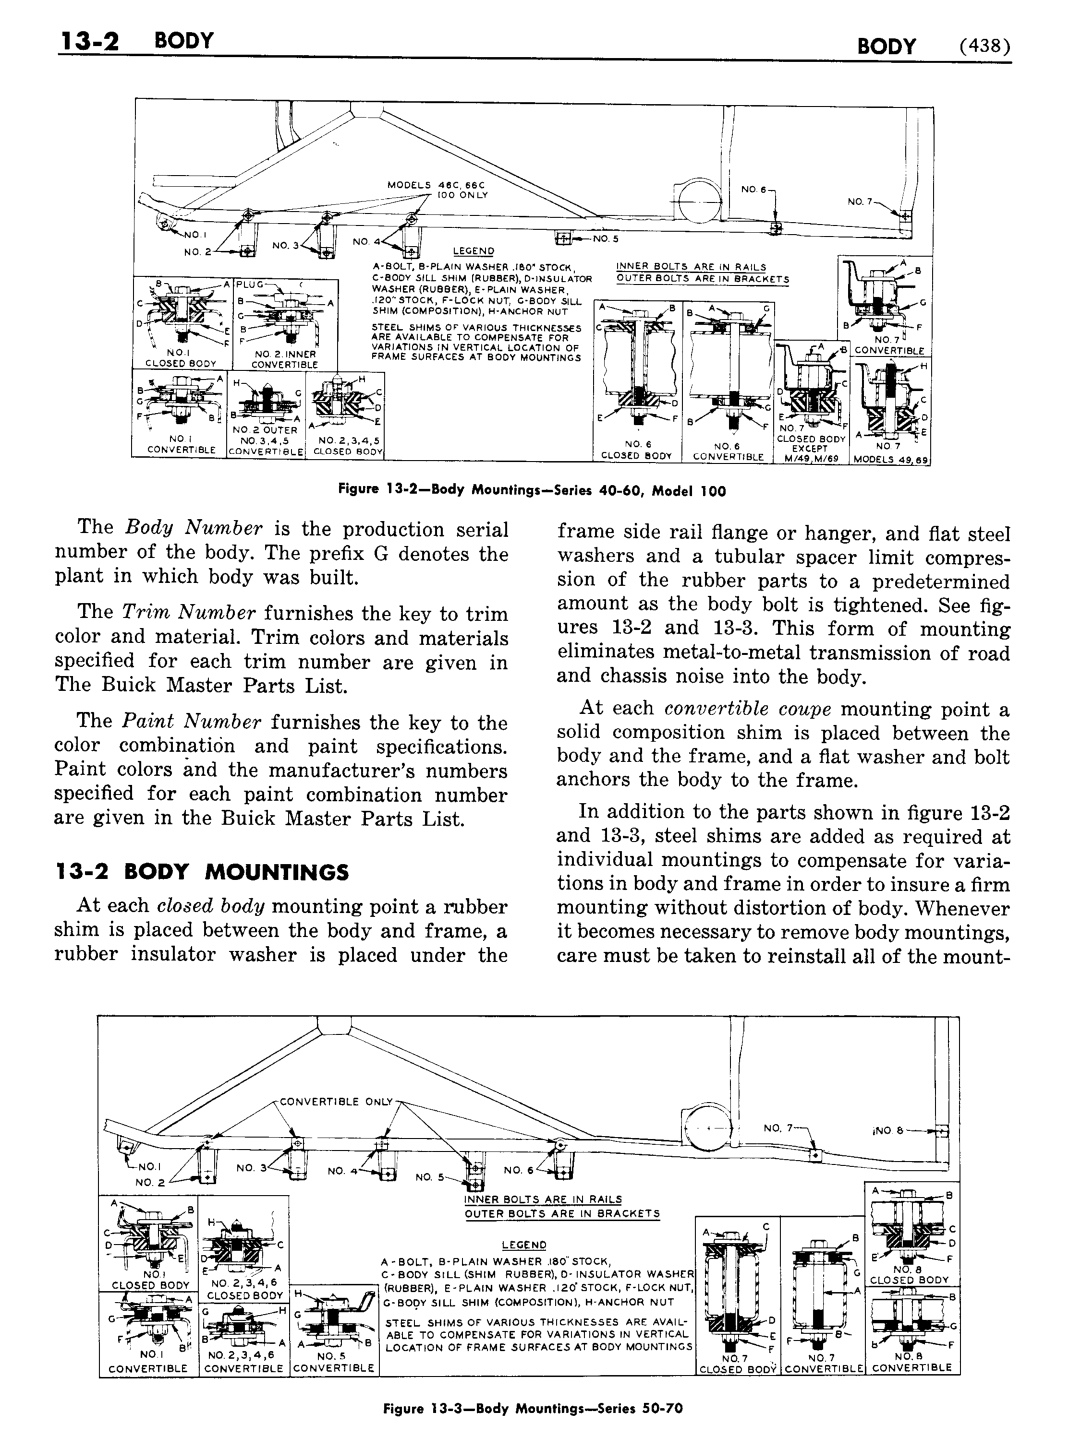 n_14 1954 Buick Shop Manual - Body-002-002.jpg